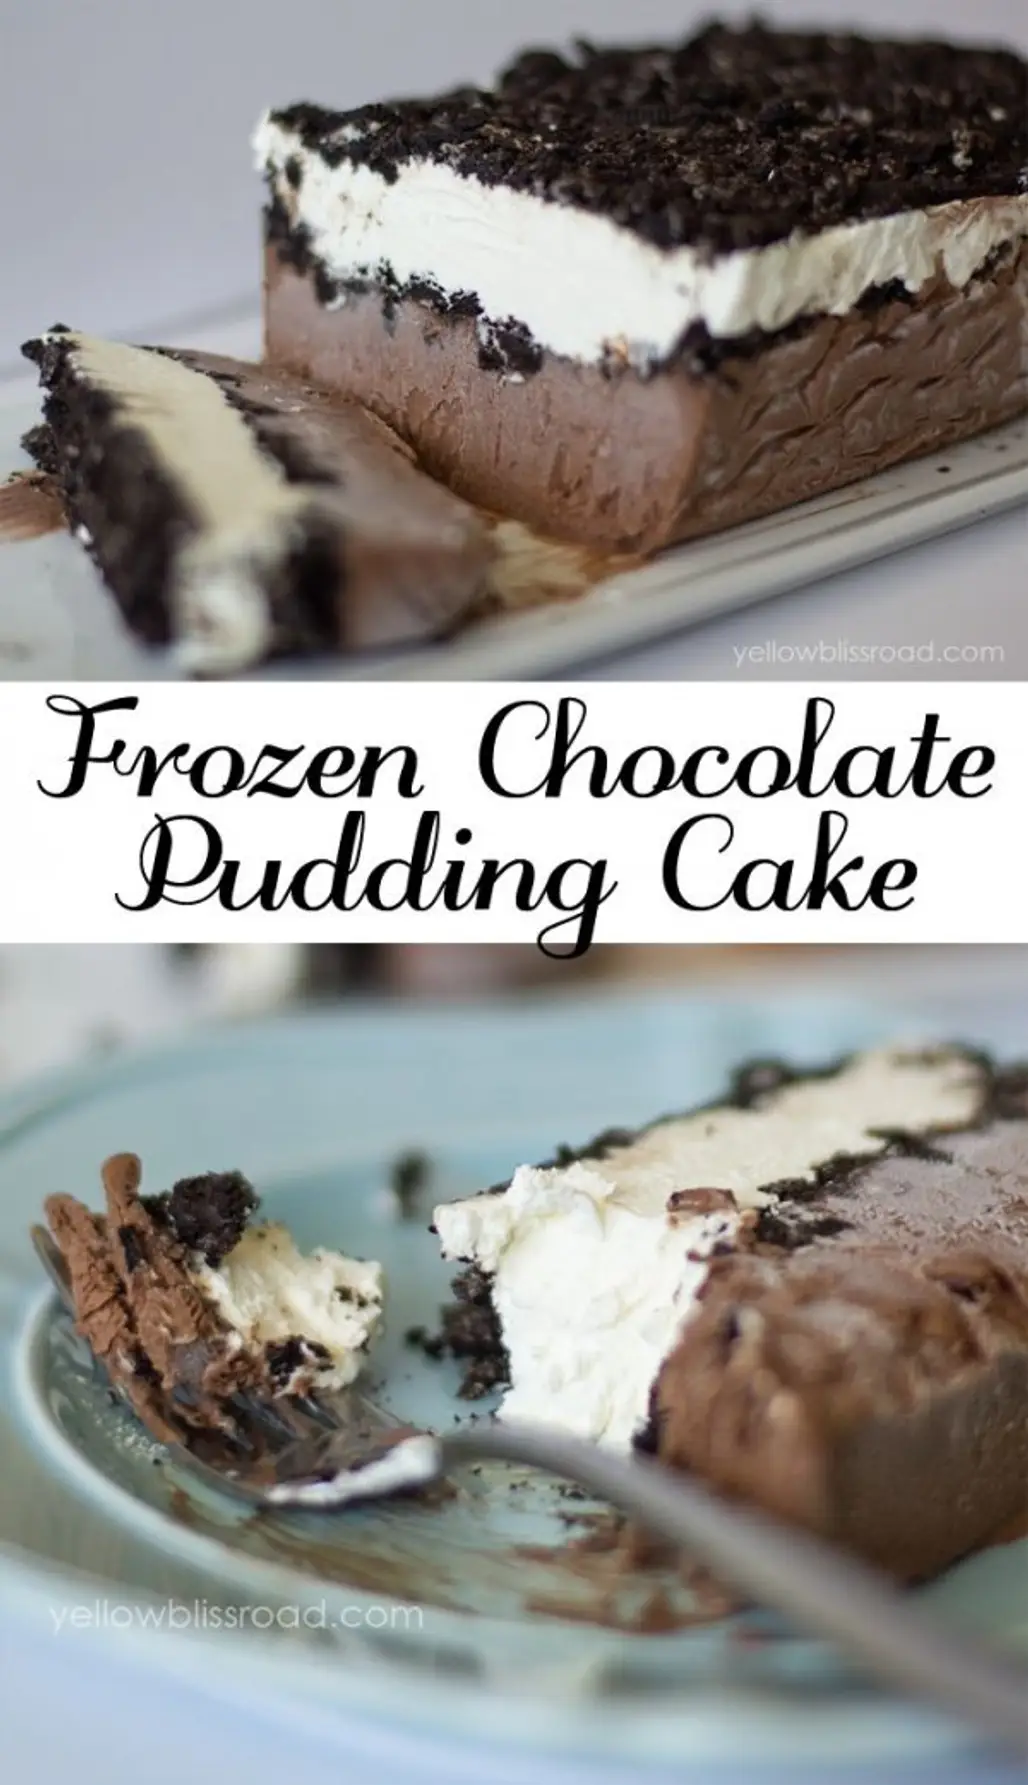 Frozen Chocolate Pudding Cake